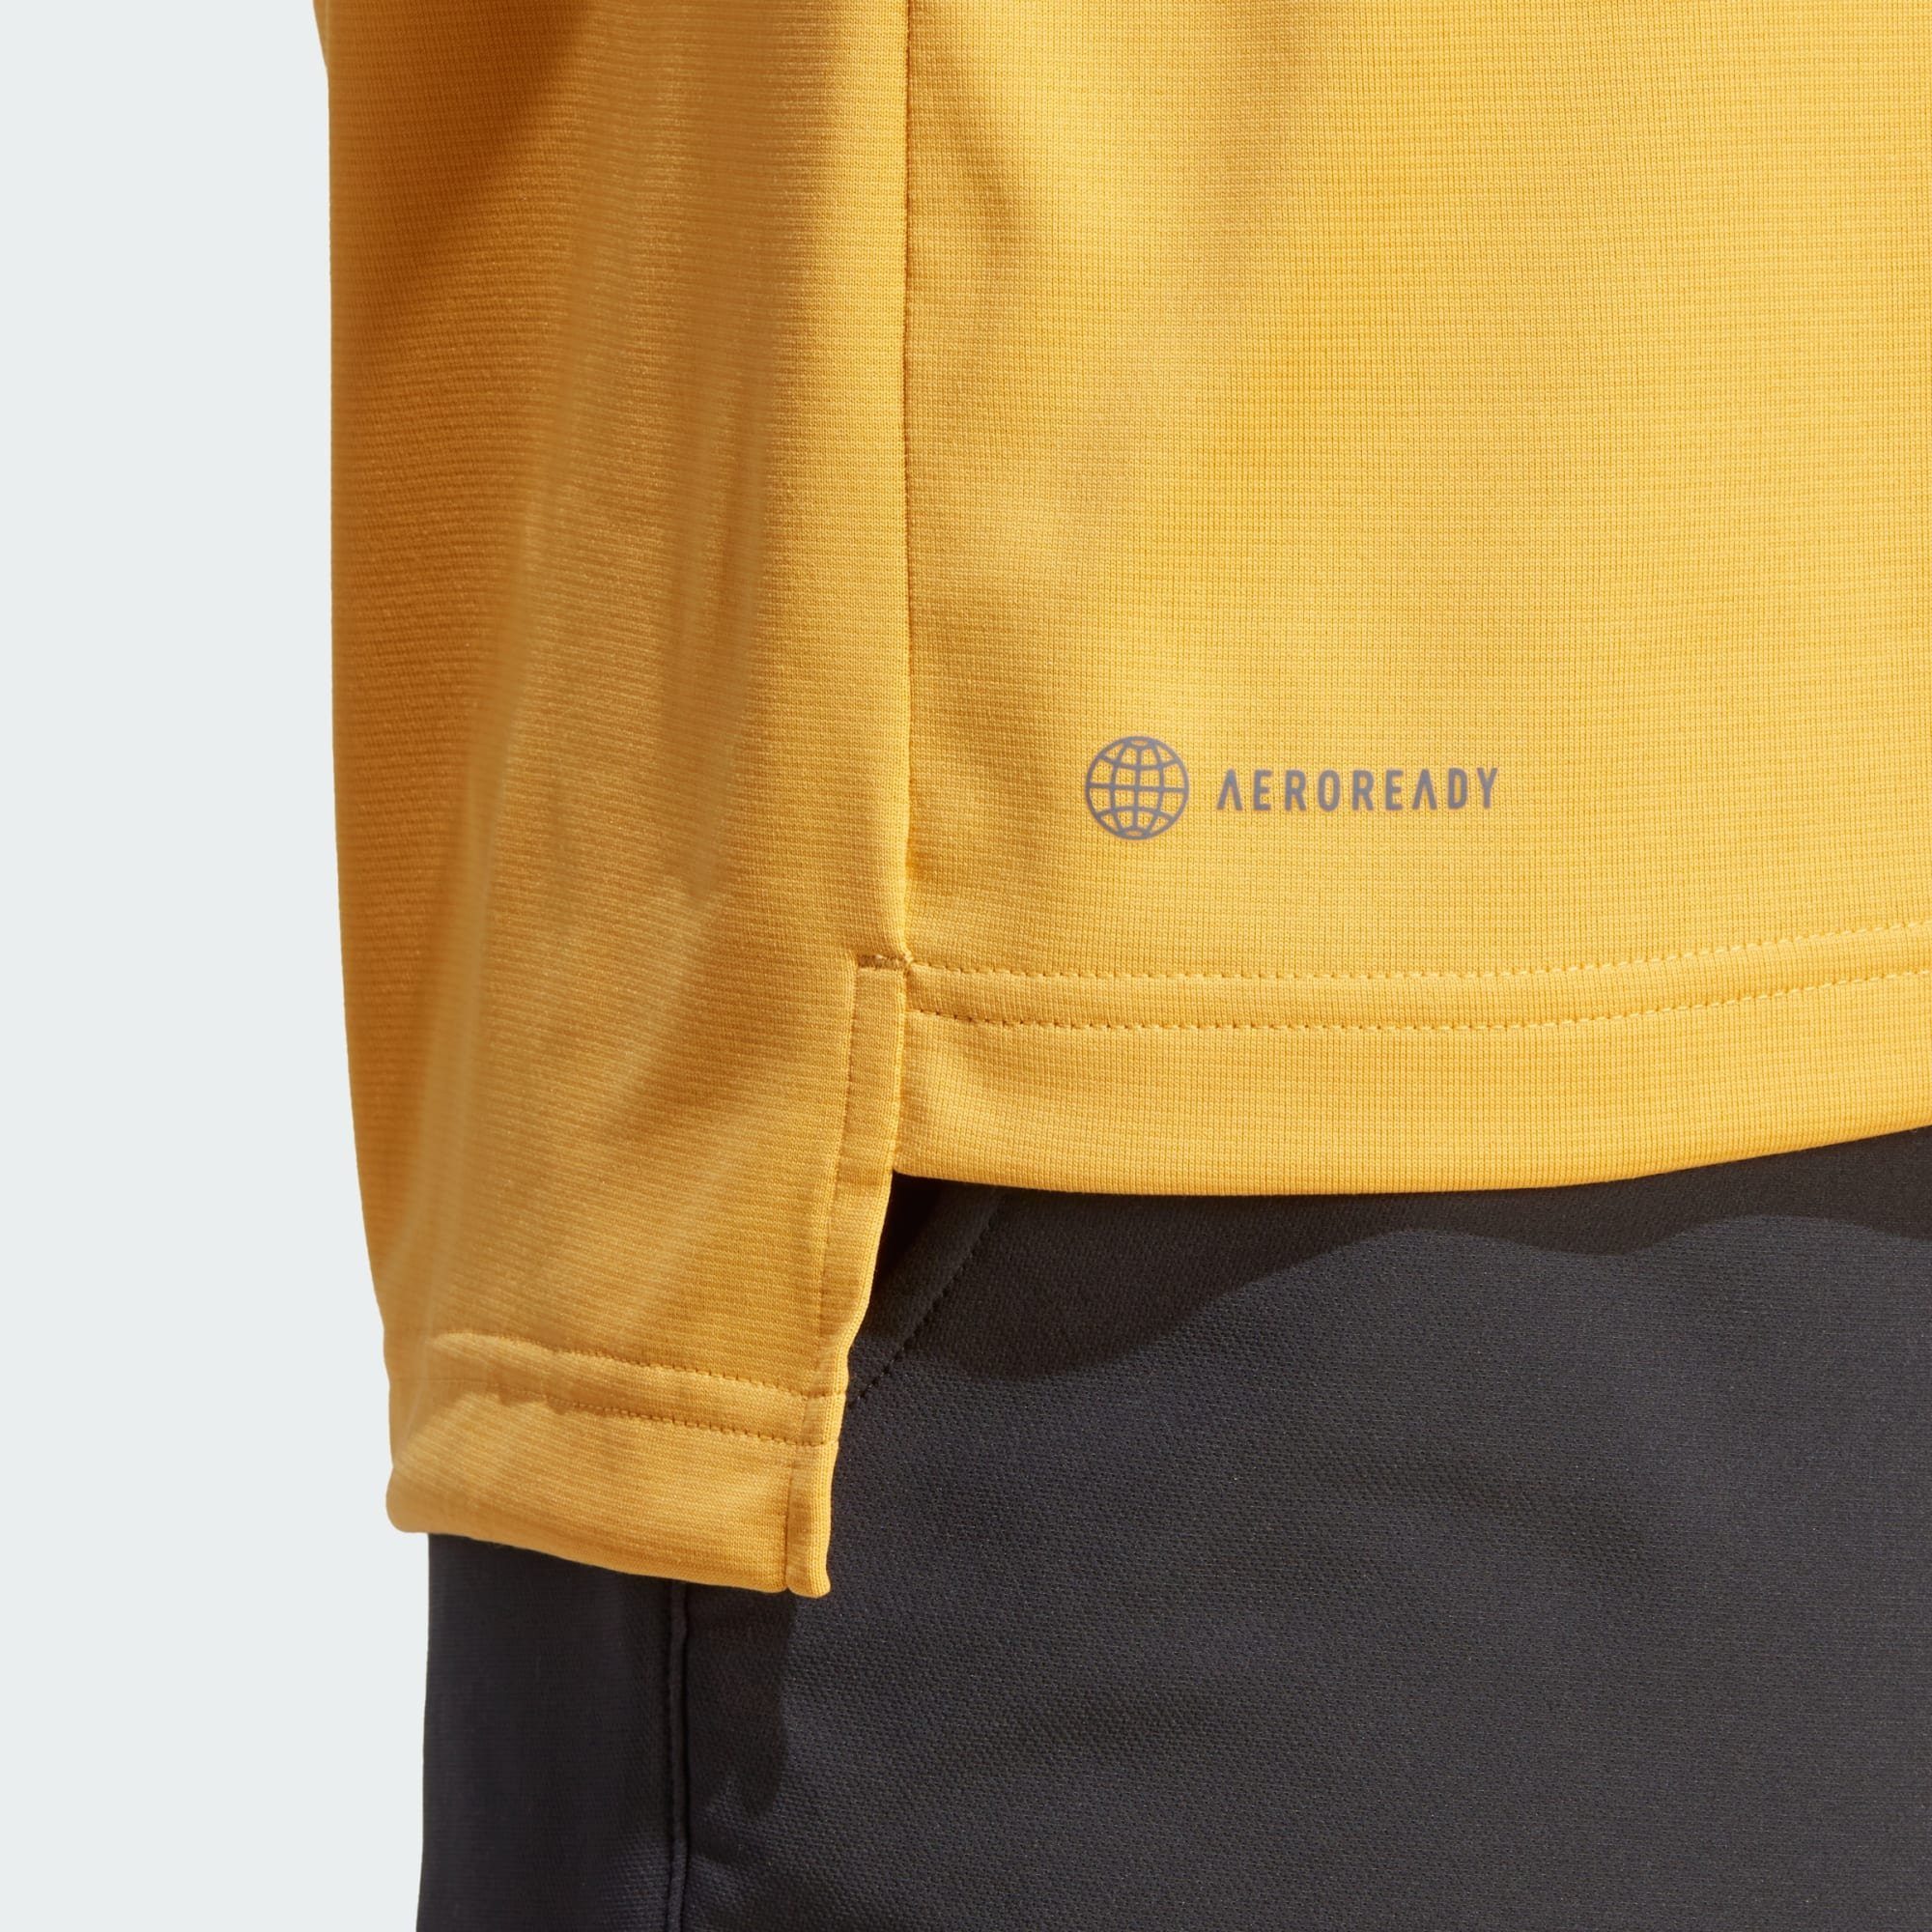 LONGSLEEVE adidas TERREX HALF-ZIP Yellow MULTI TERREX Preloved Langarmshirt